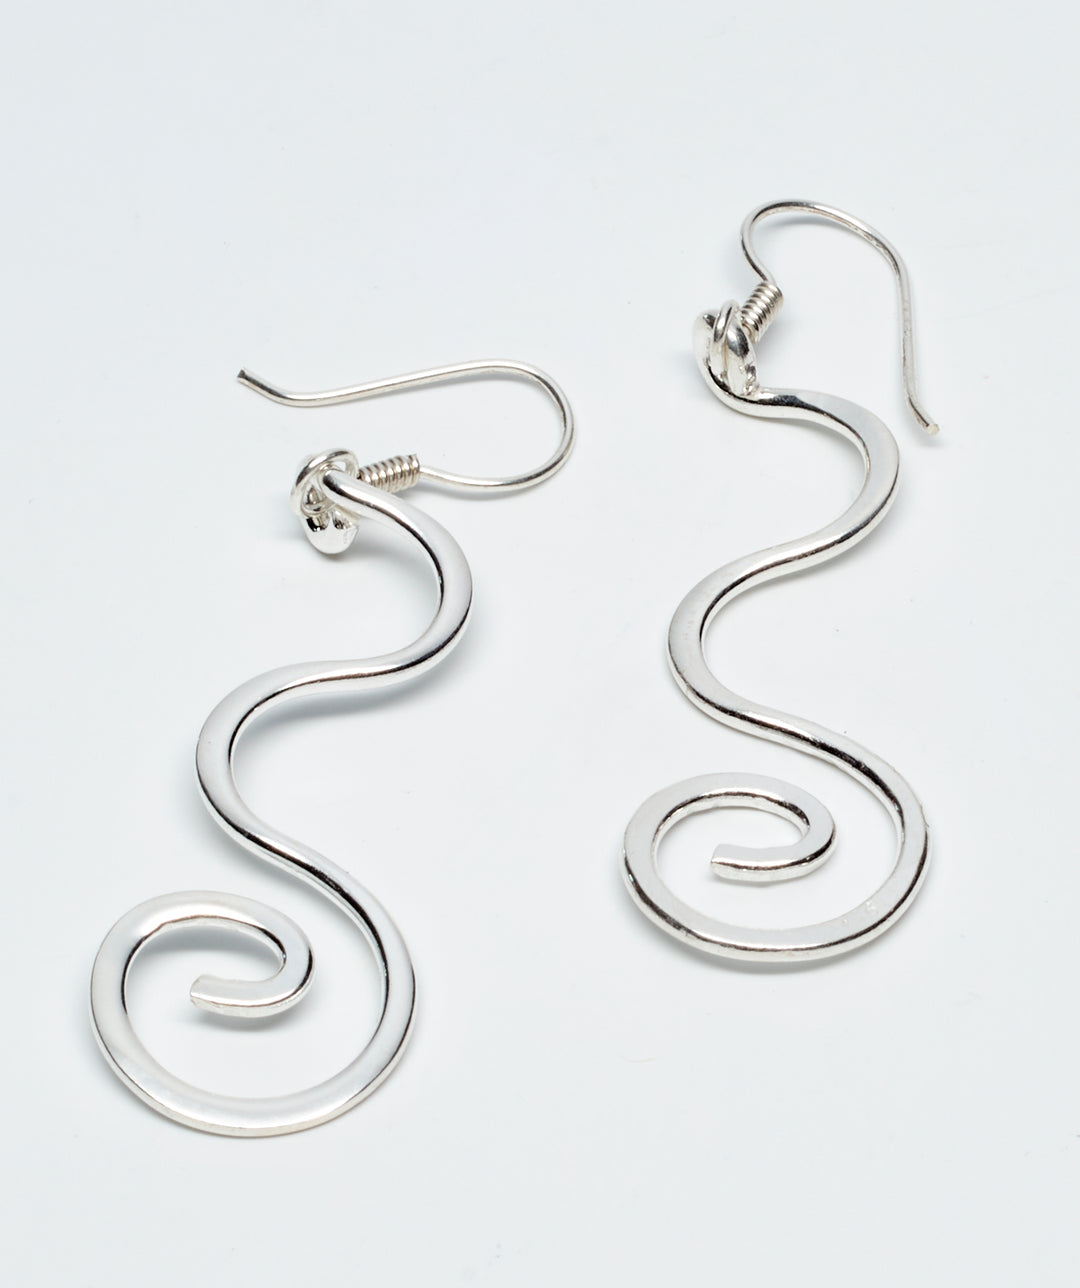 Long Curled Silver Dangle Earrings